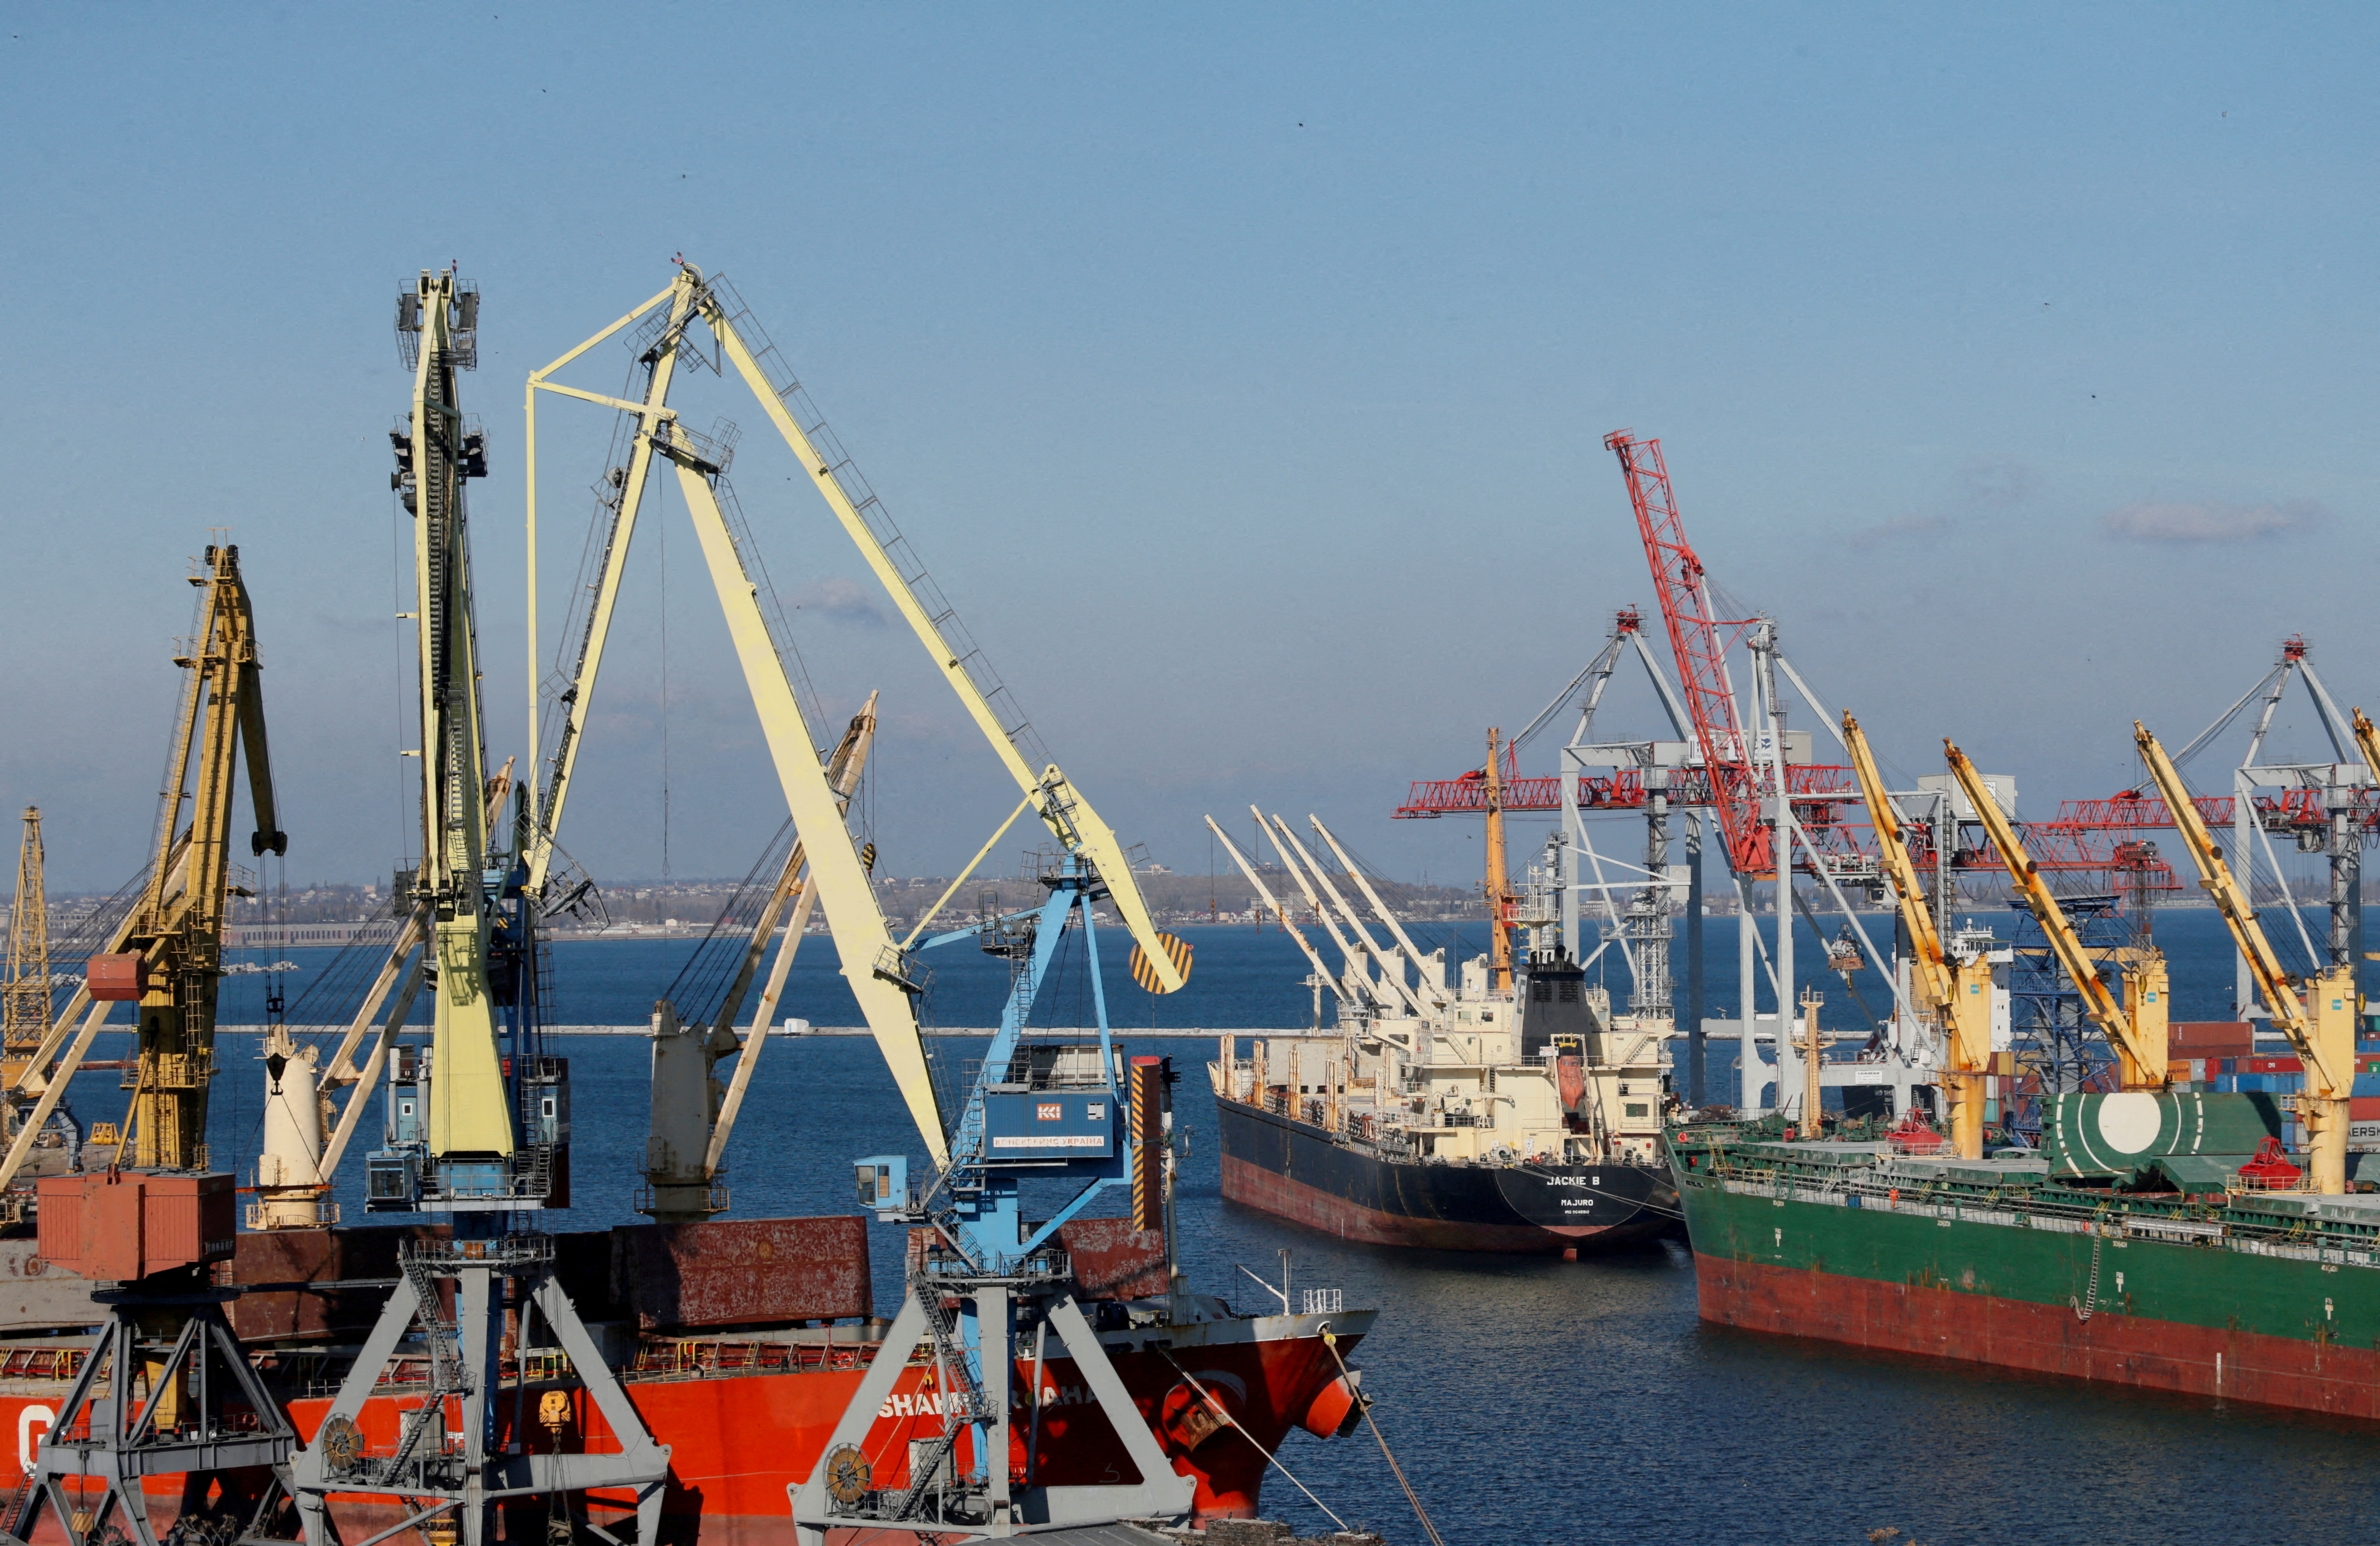 Cargo ships are docked in Black sea port of ODESSA